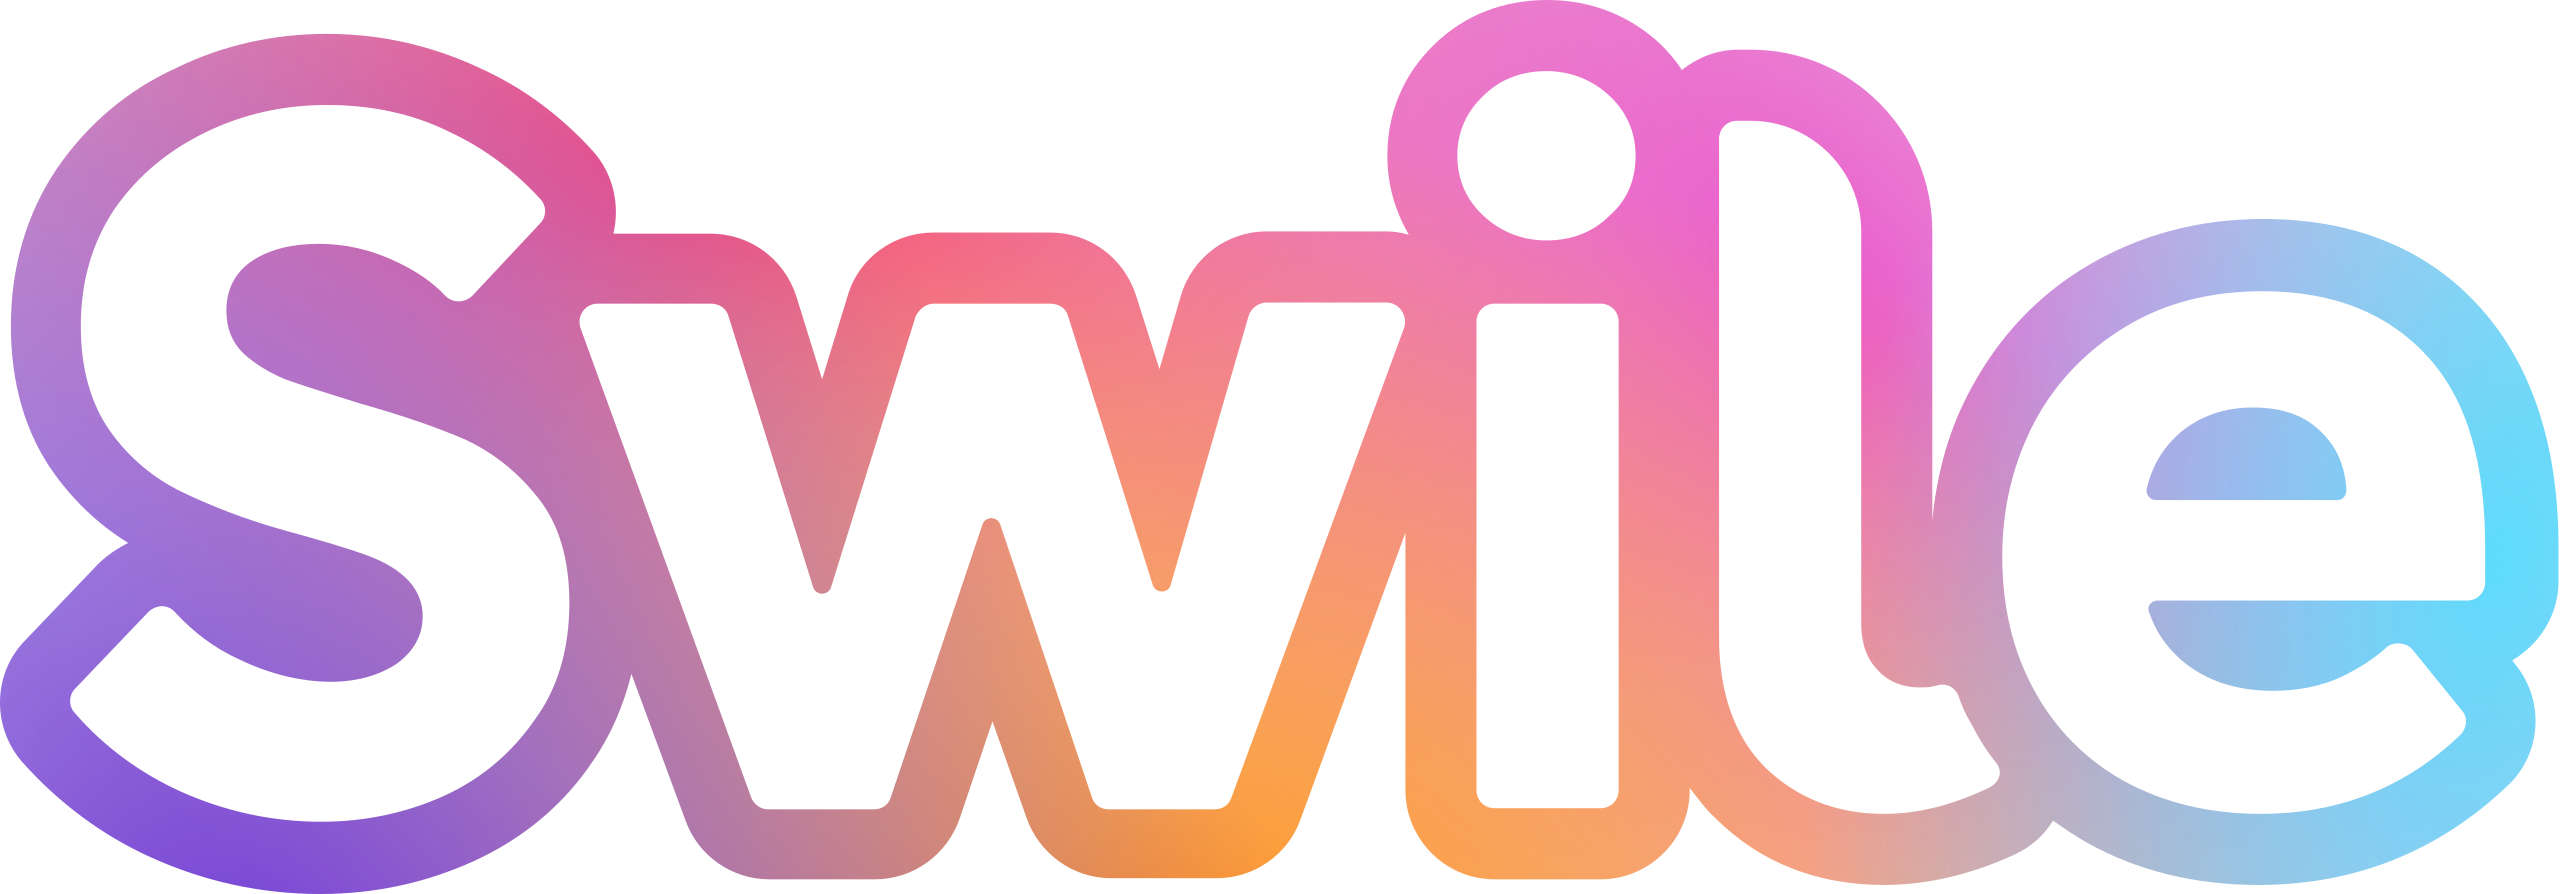 File:Logo Swile.svg - Wikimedia Commons